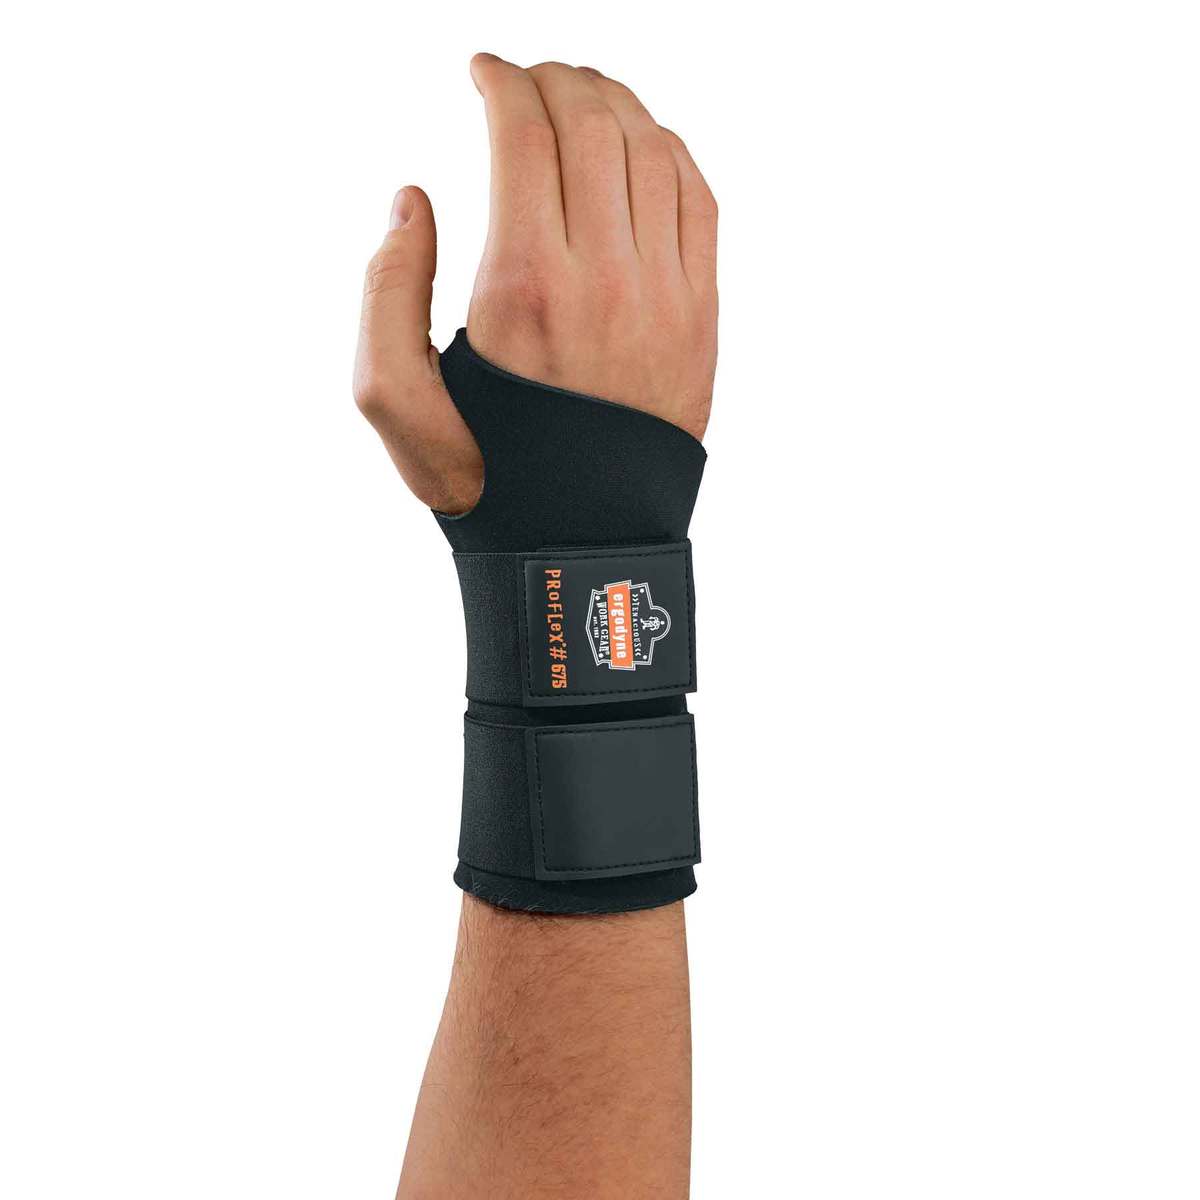 Ergodyne Medium Black ProFlex® 675 Neoprene Ambidextrous Wrist Support